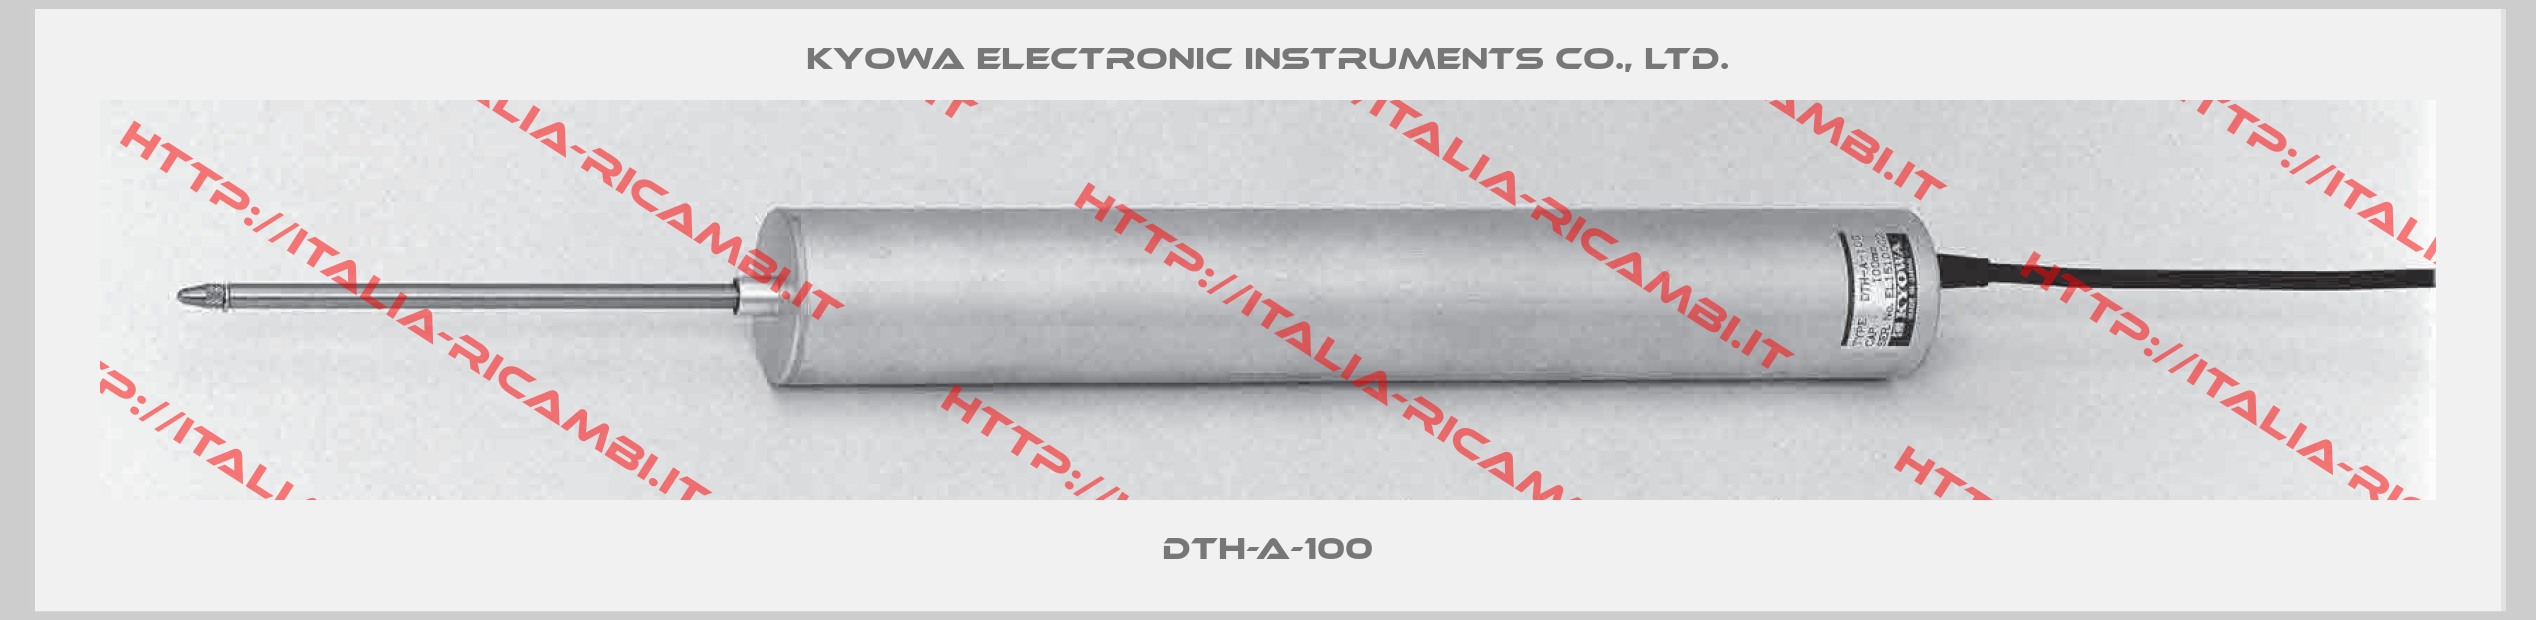 KYOWA ELECTRONIC INSTRUMENTS CO., LTD.-DTH-A-100